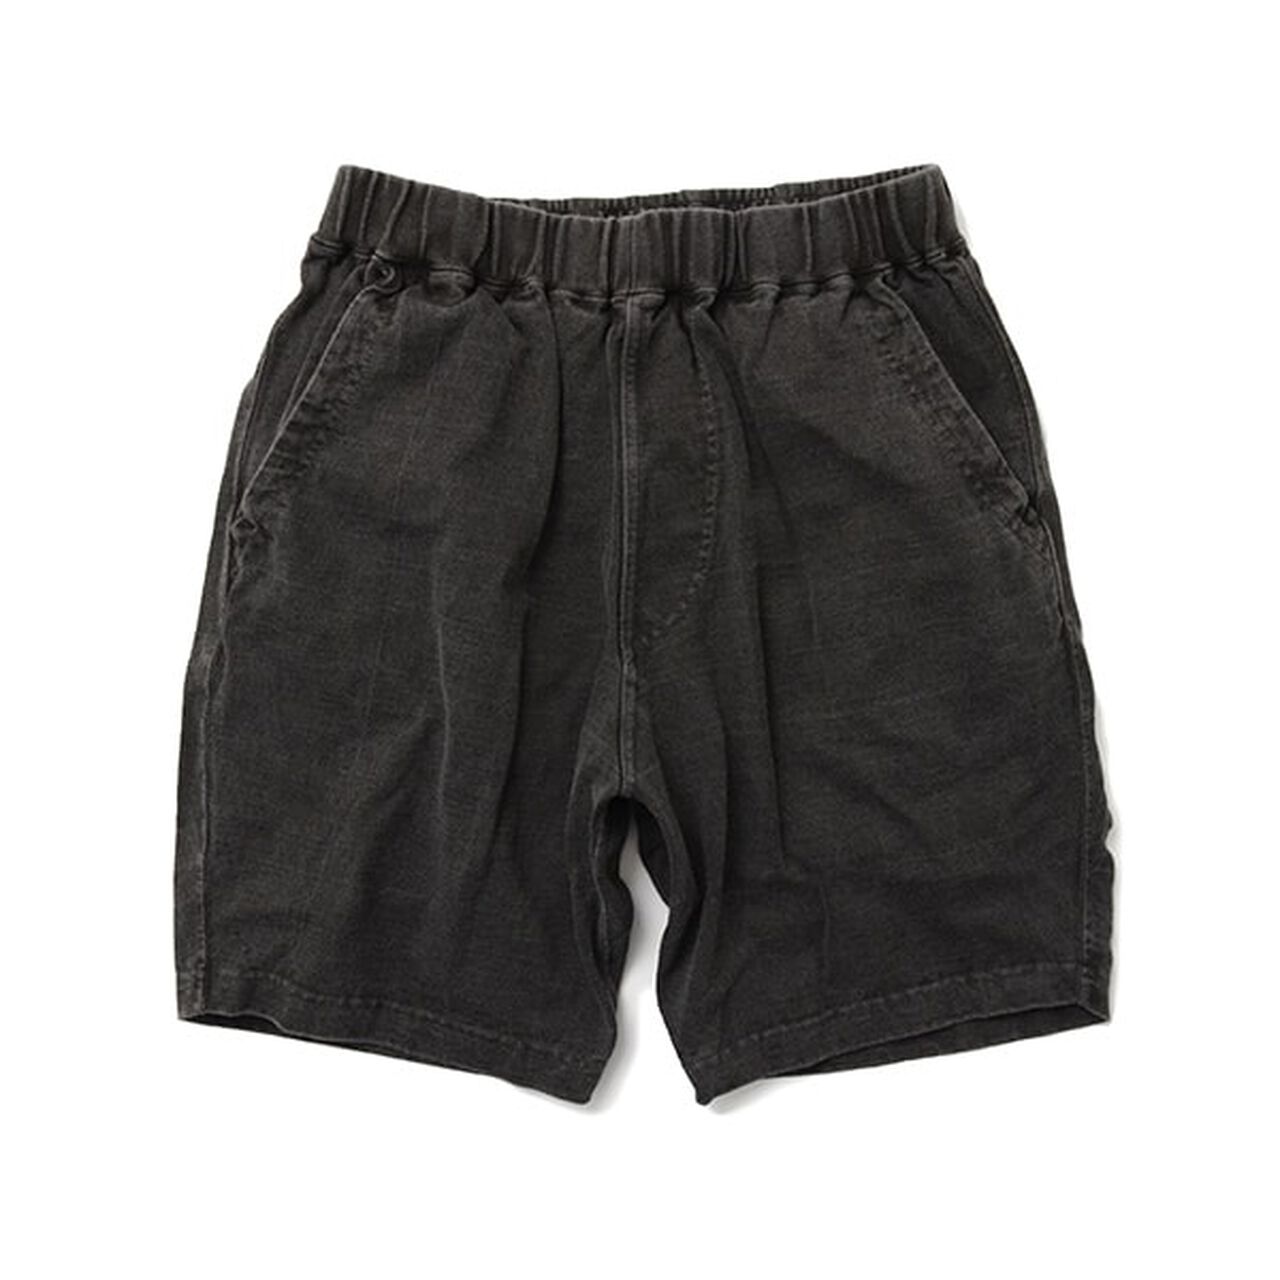 Travel shorts,P.Black, large image number 0